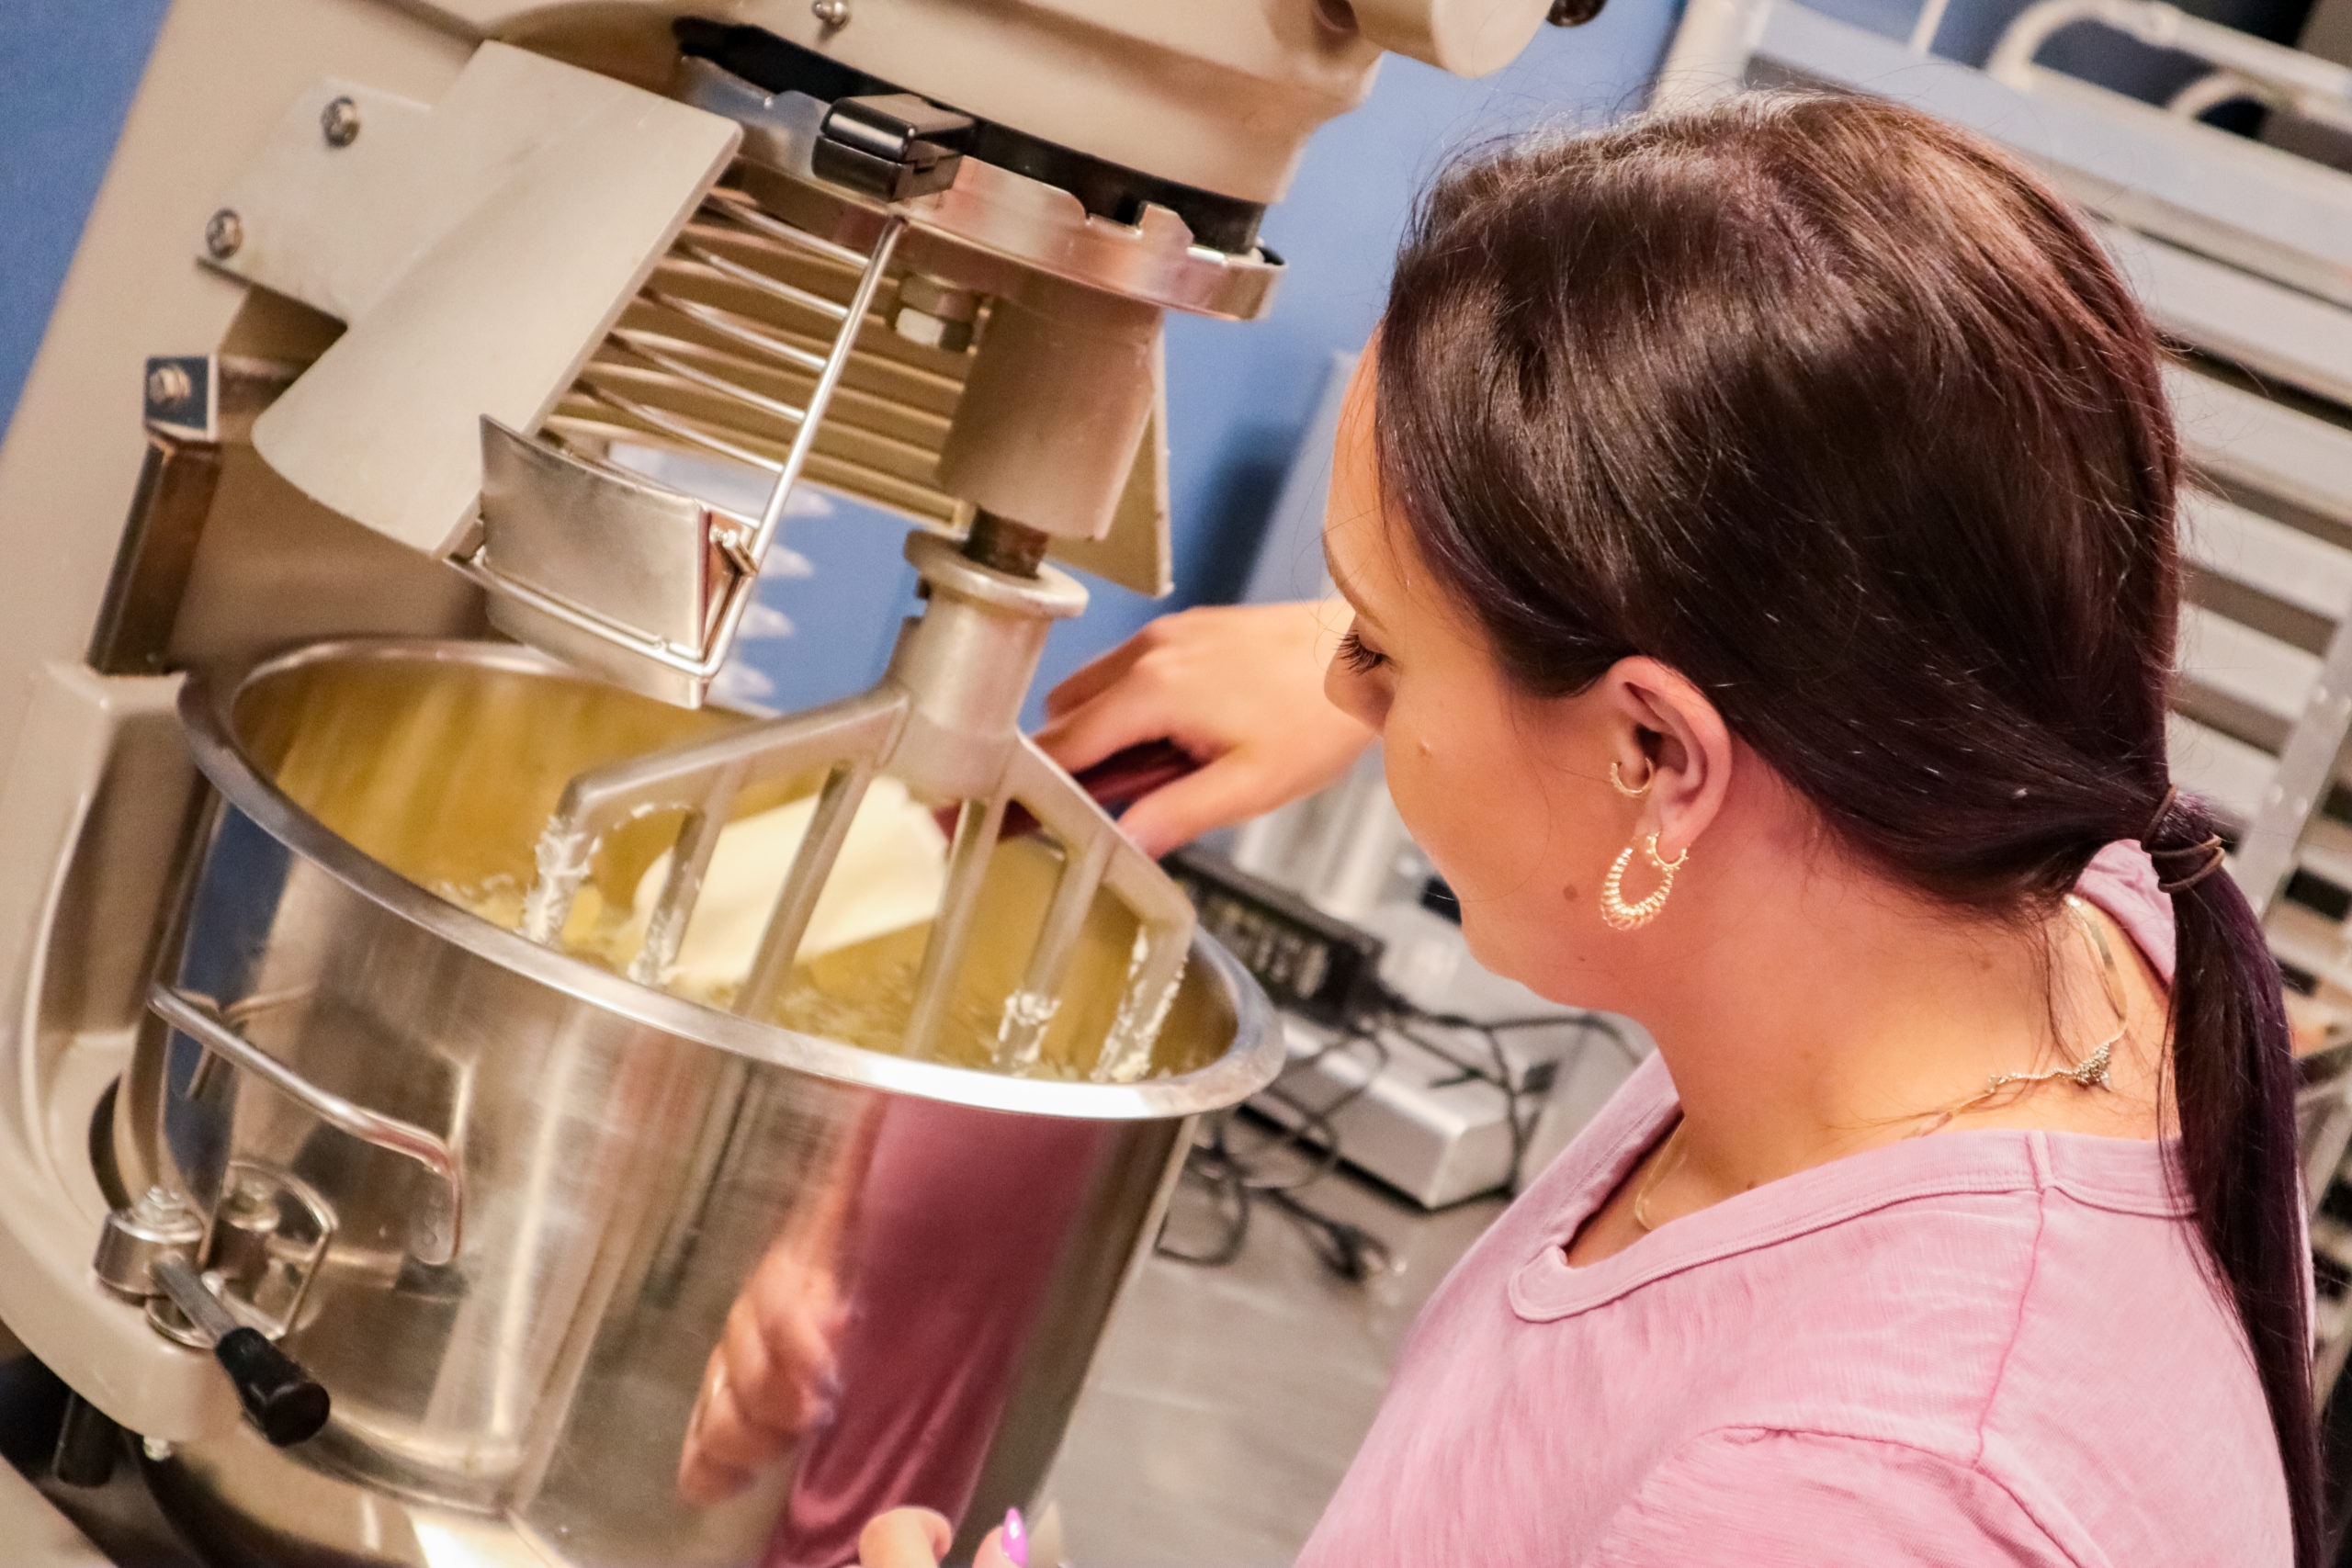 Lackawanna College’s Ghost Kitchen program helps grow start-up businesses